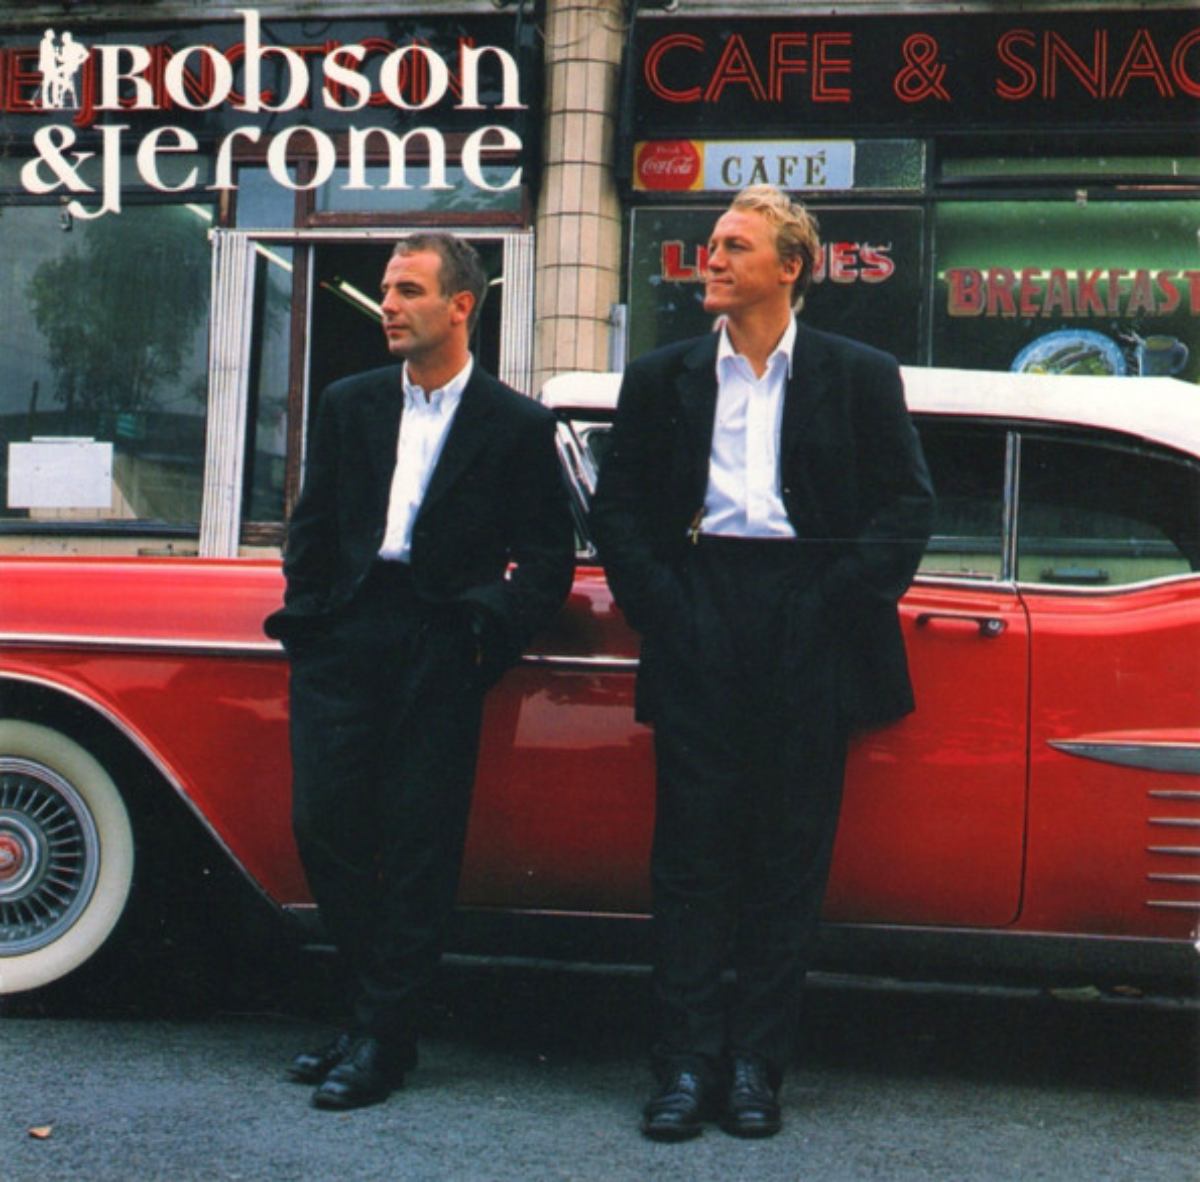 Robson & Jerome album cover (1995)